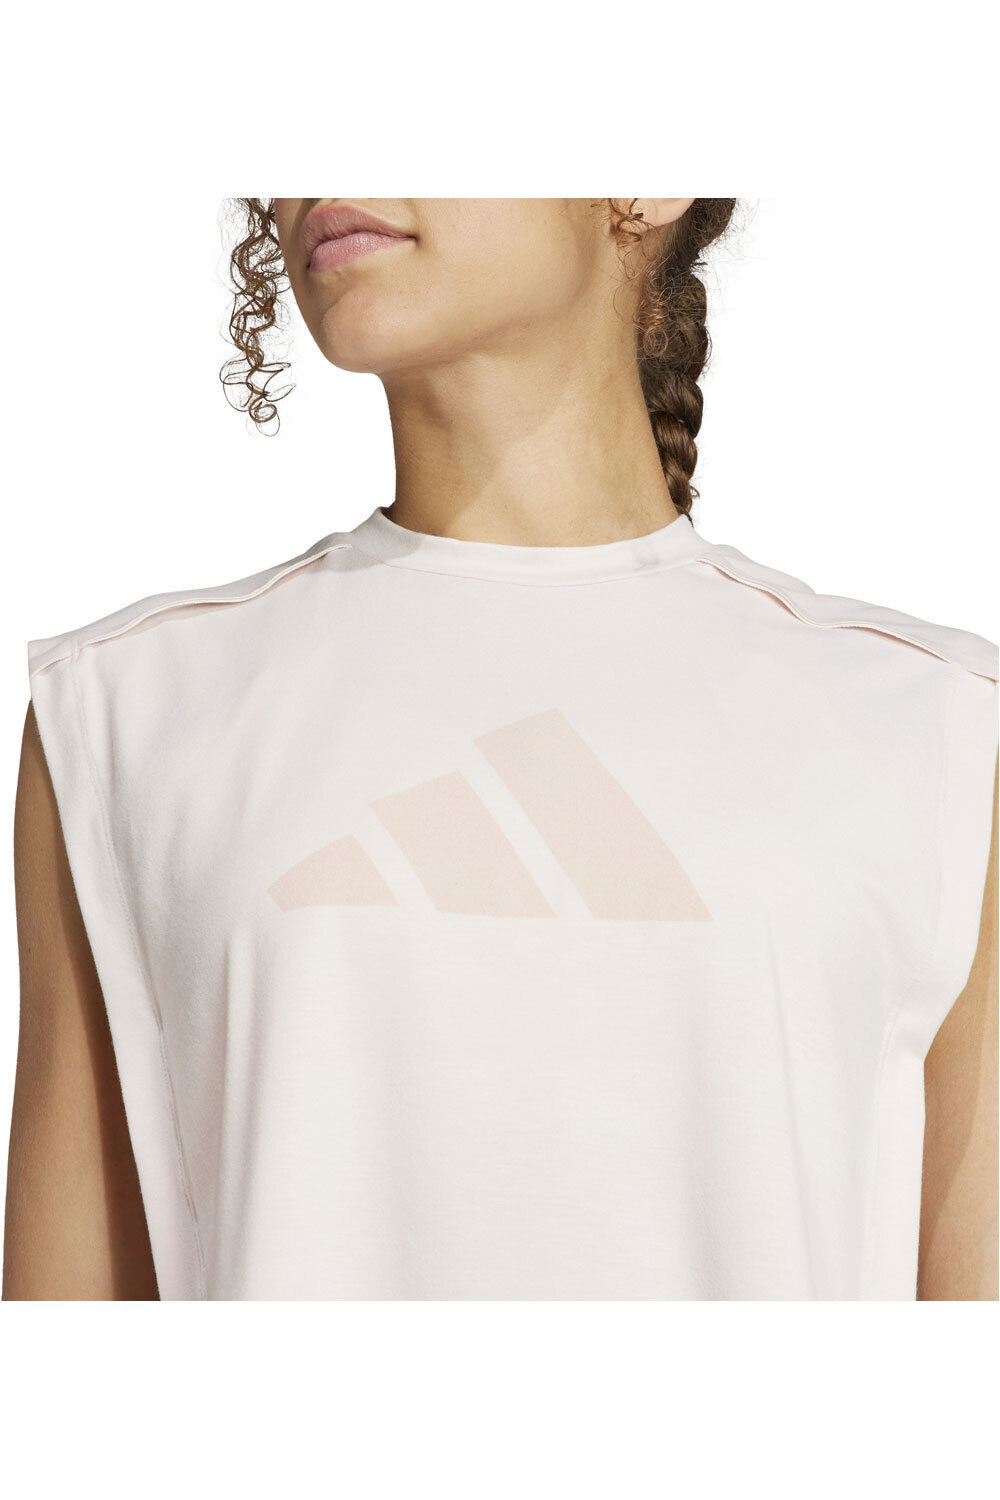 adidas camiseta tirantes fitness mujer POWER BL TK vista detalle